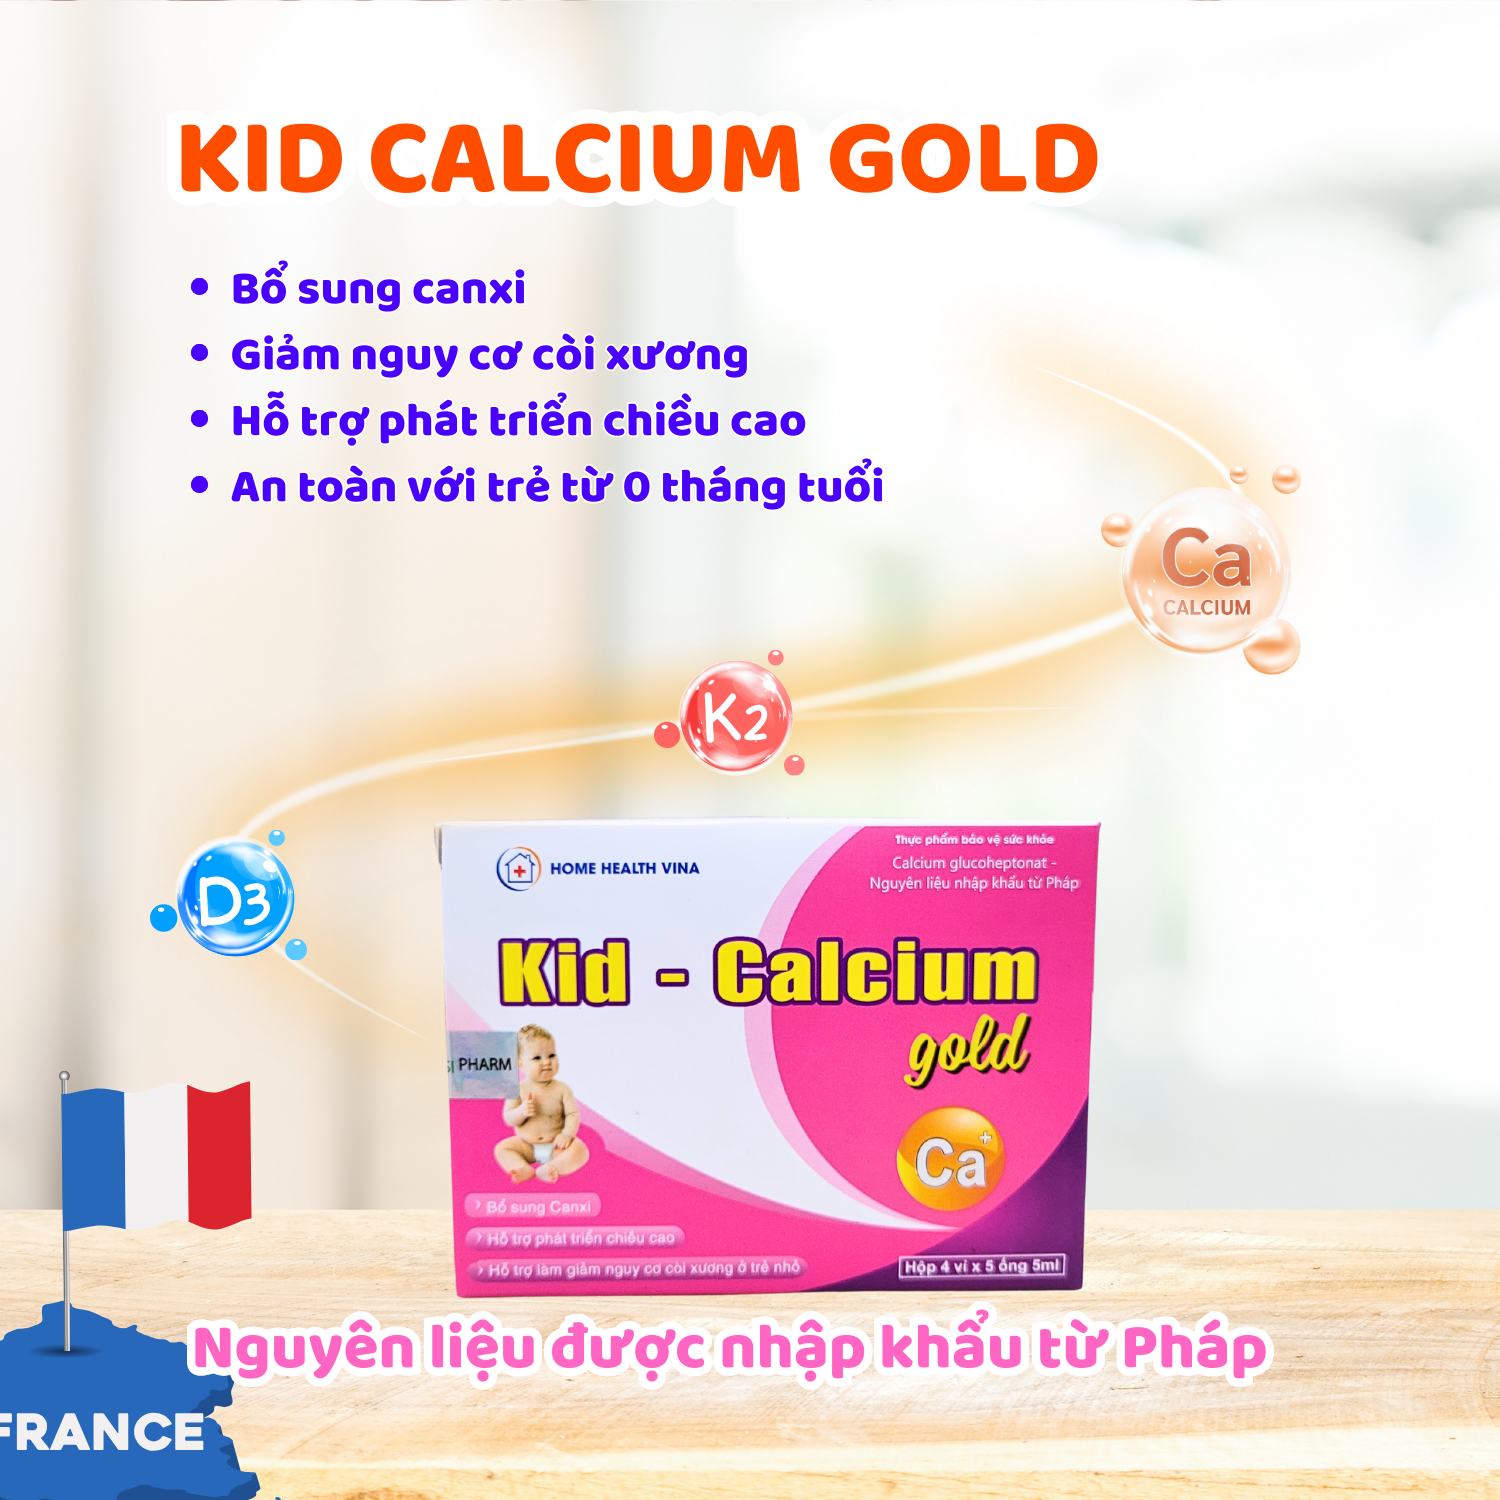 KID CALCIUM GOLD - Canxi Hữu Cơ cho trẻ